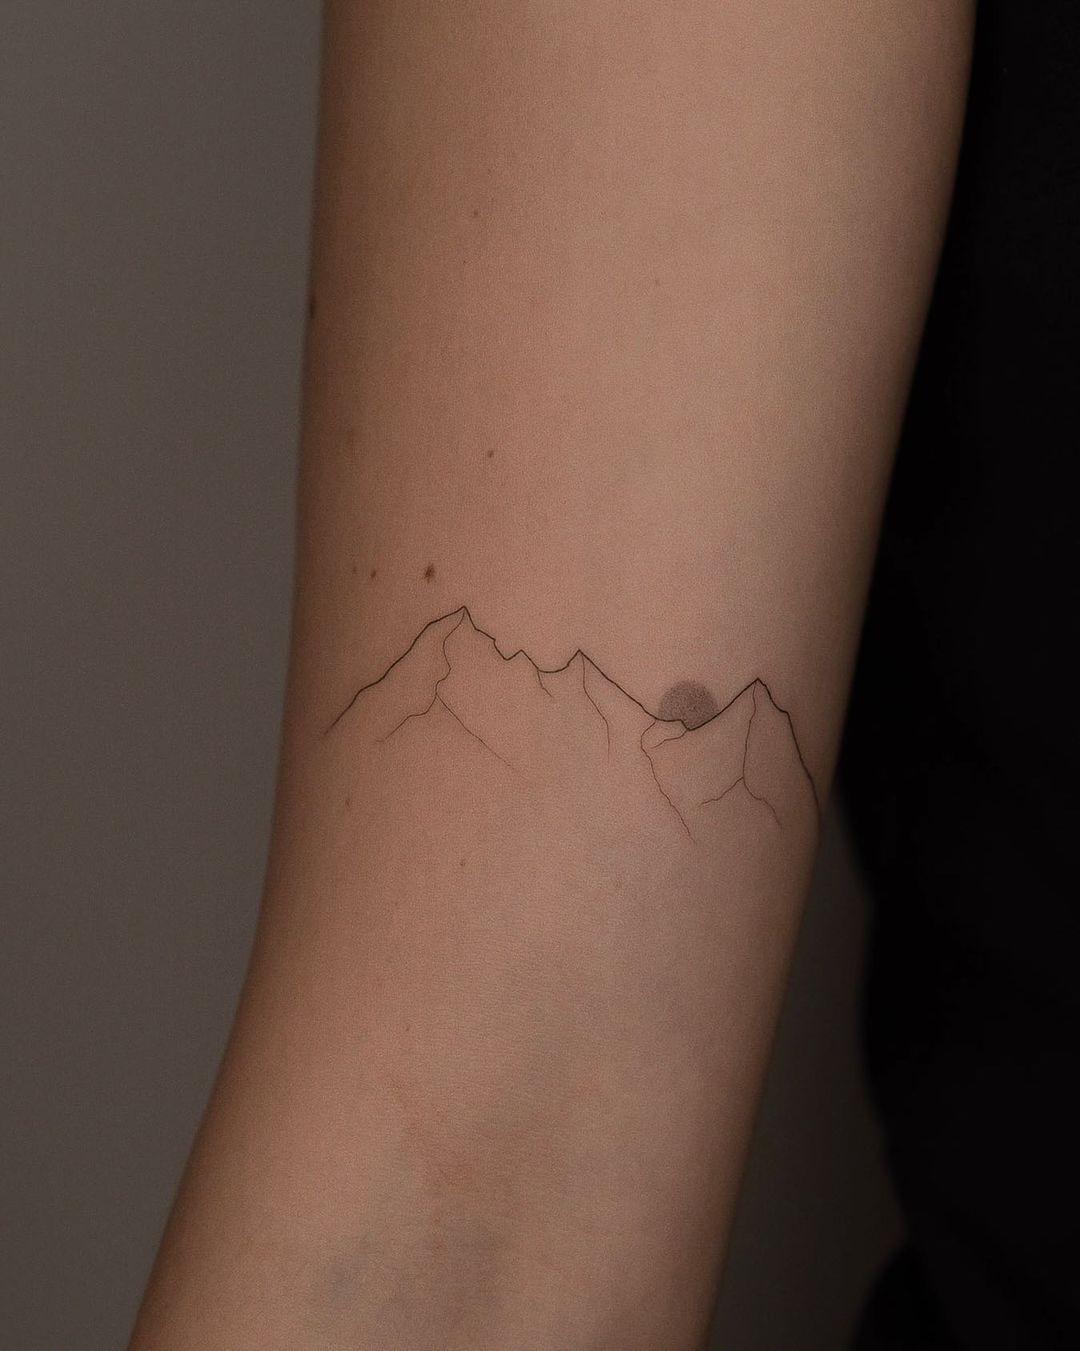 Forearm mountain tattoo by mid.ttt